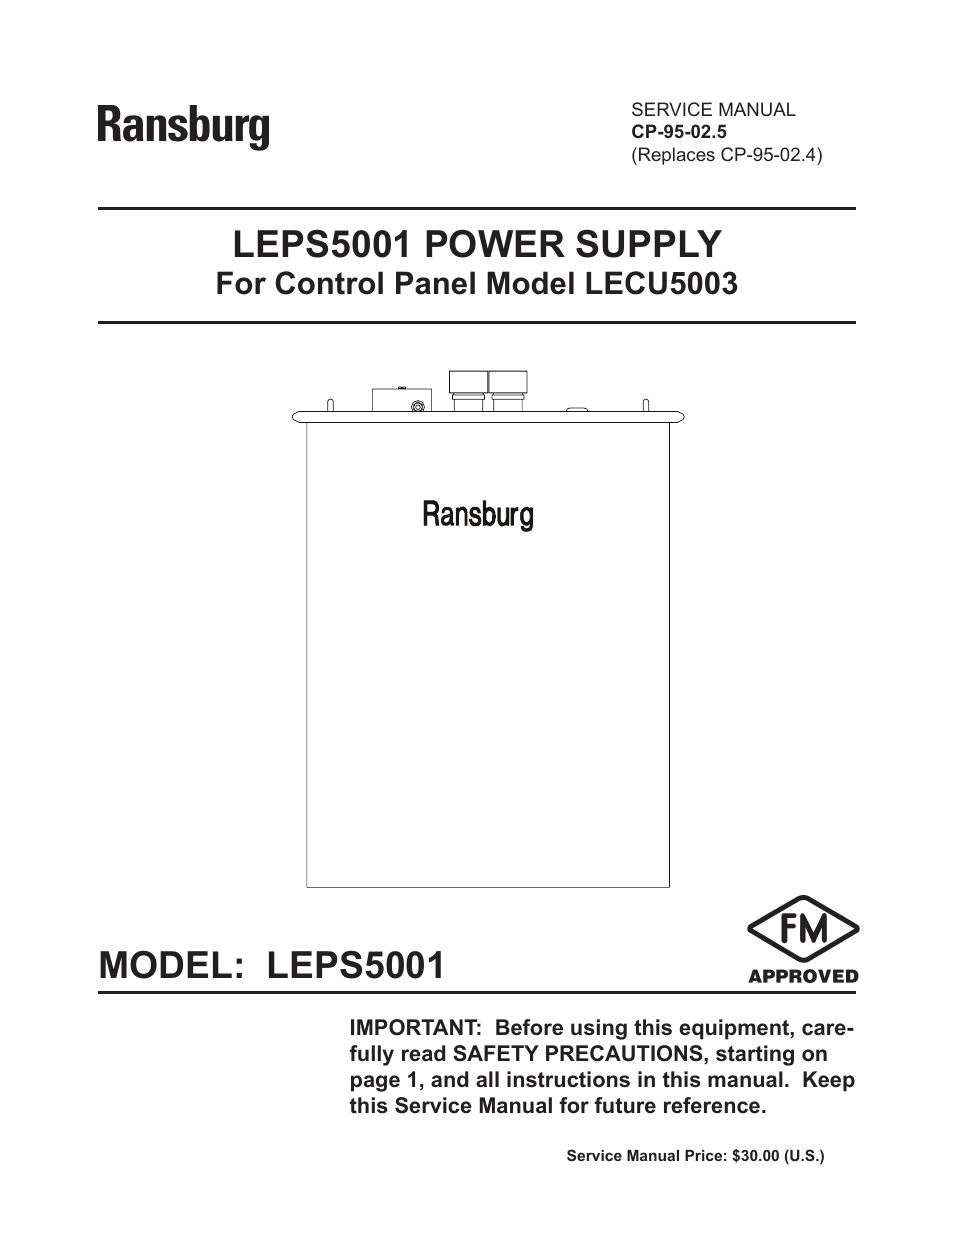 LEPS5001 Power Supply for LECU5003